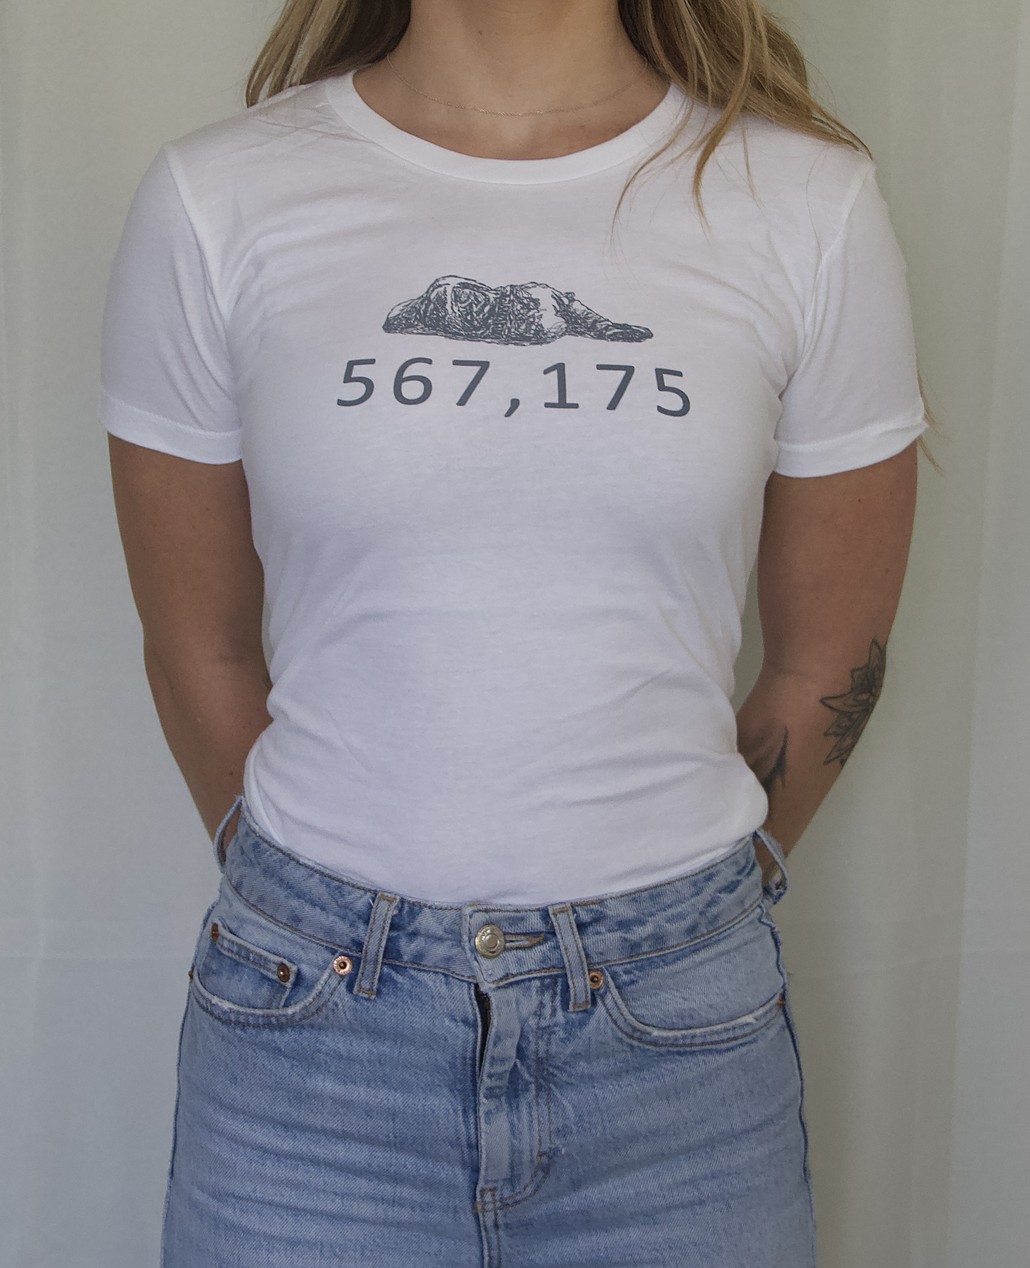 567175 Homeless Advocacy T-Shirt_Involvd Social Advocacy Clothing Bramd